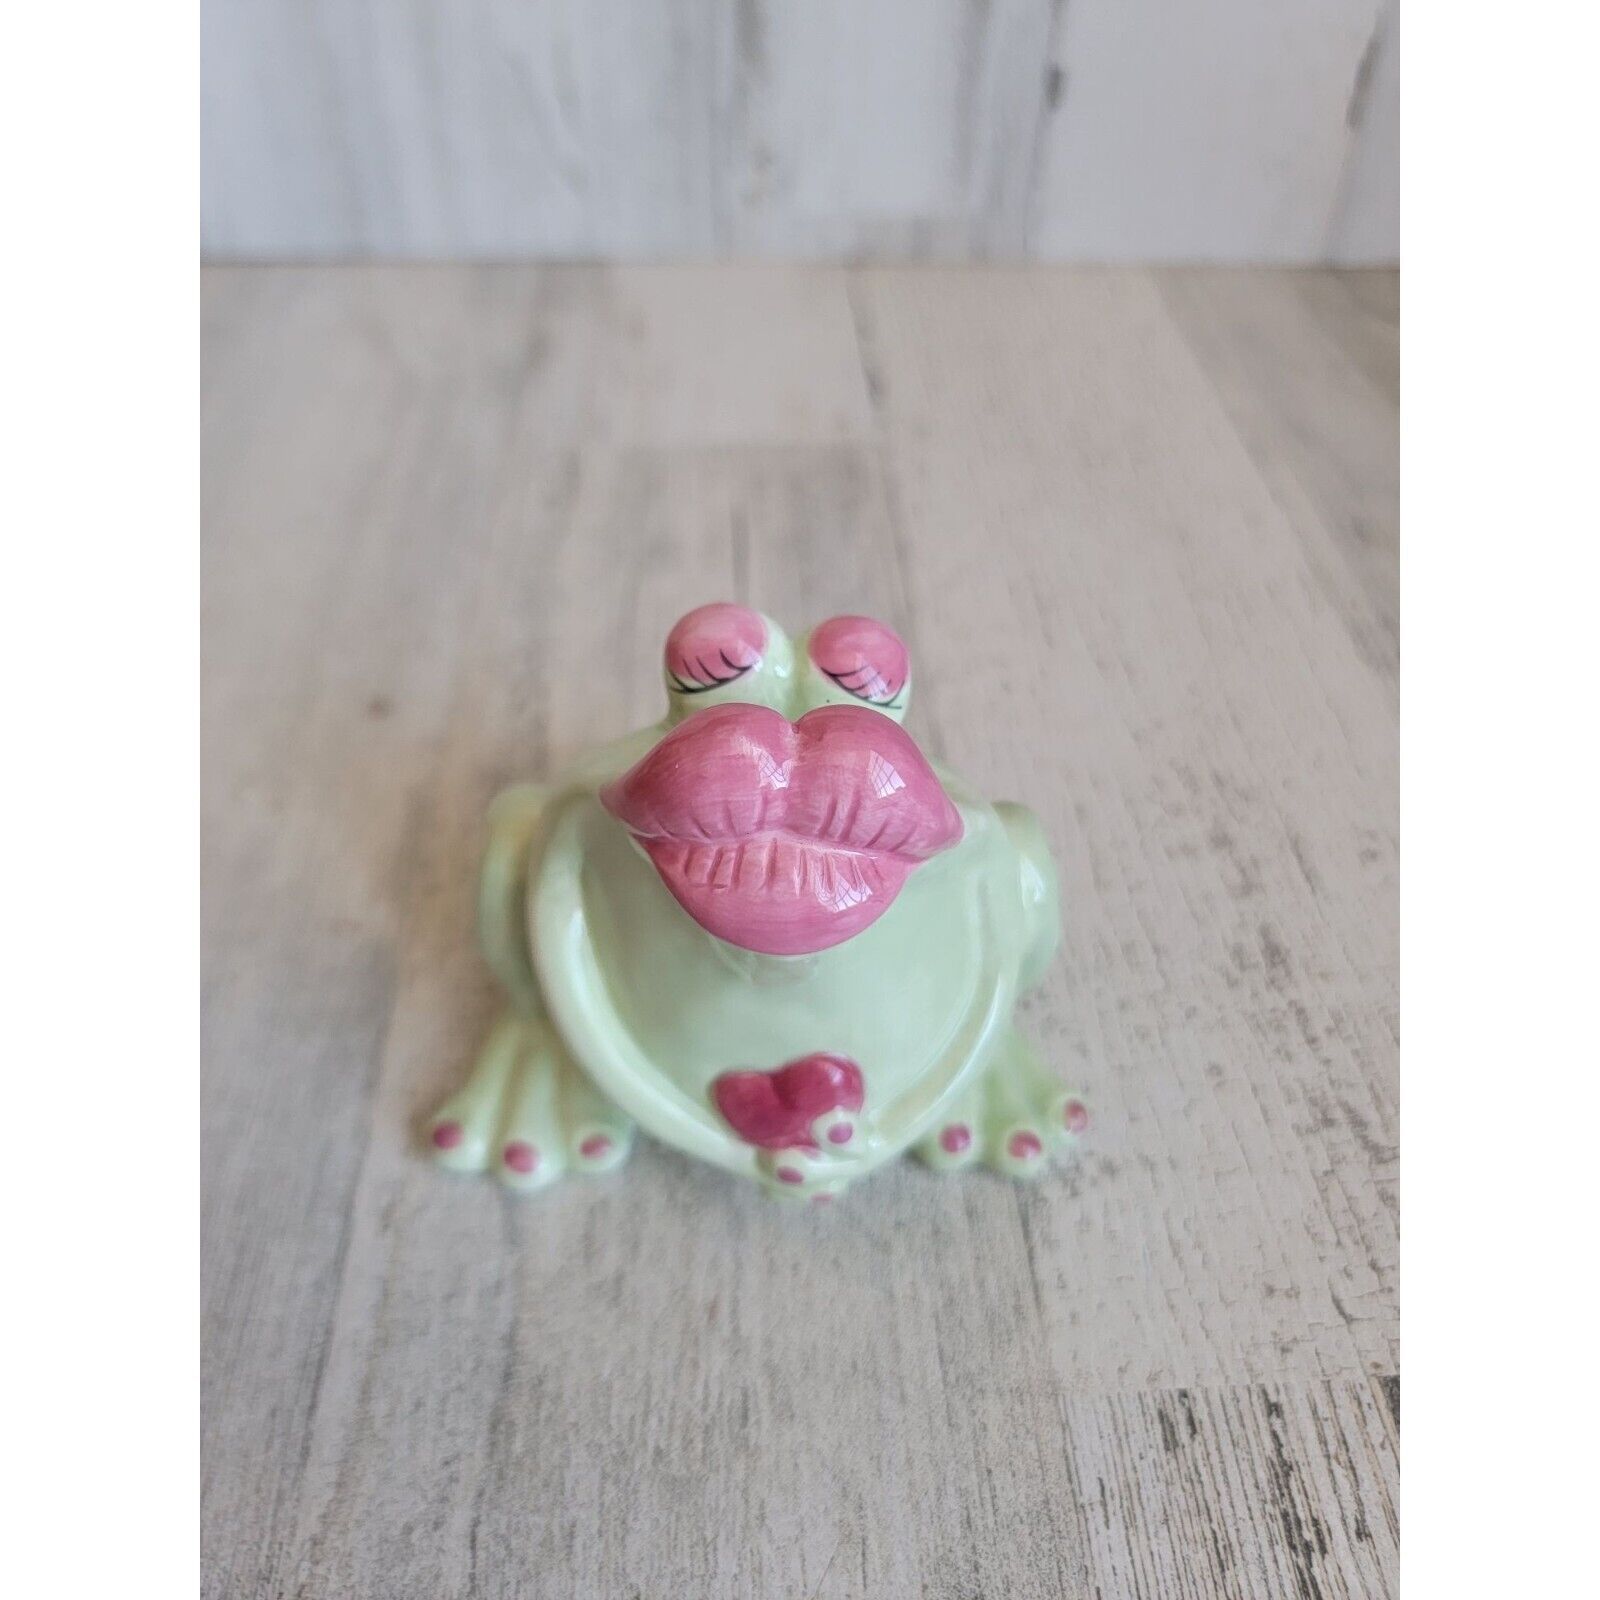 Ganz frog puckered lips kissing heart Valentine